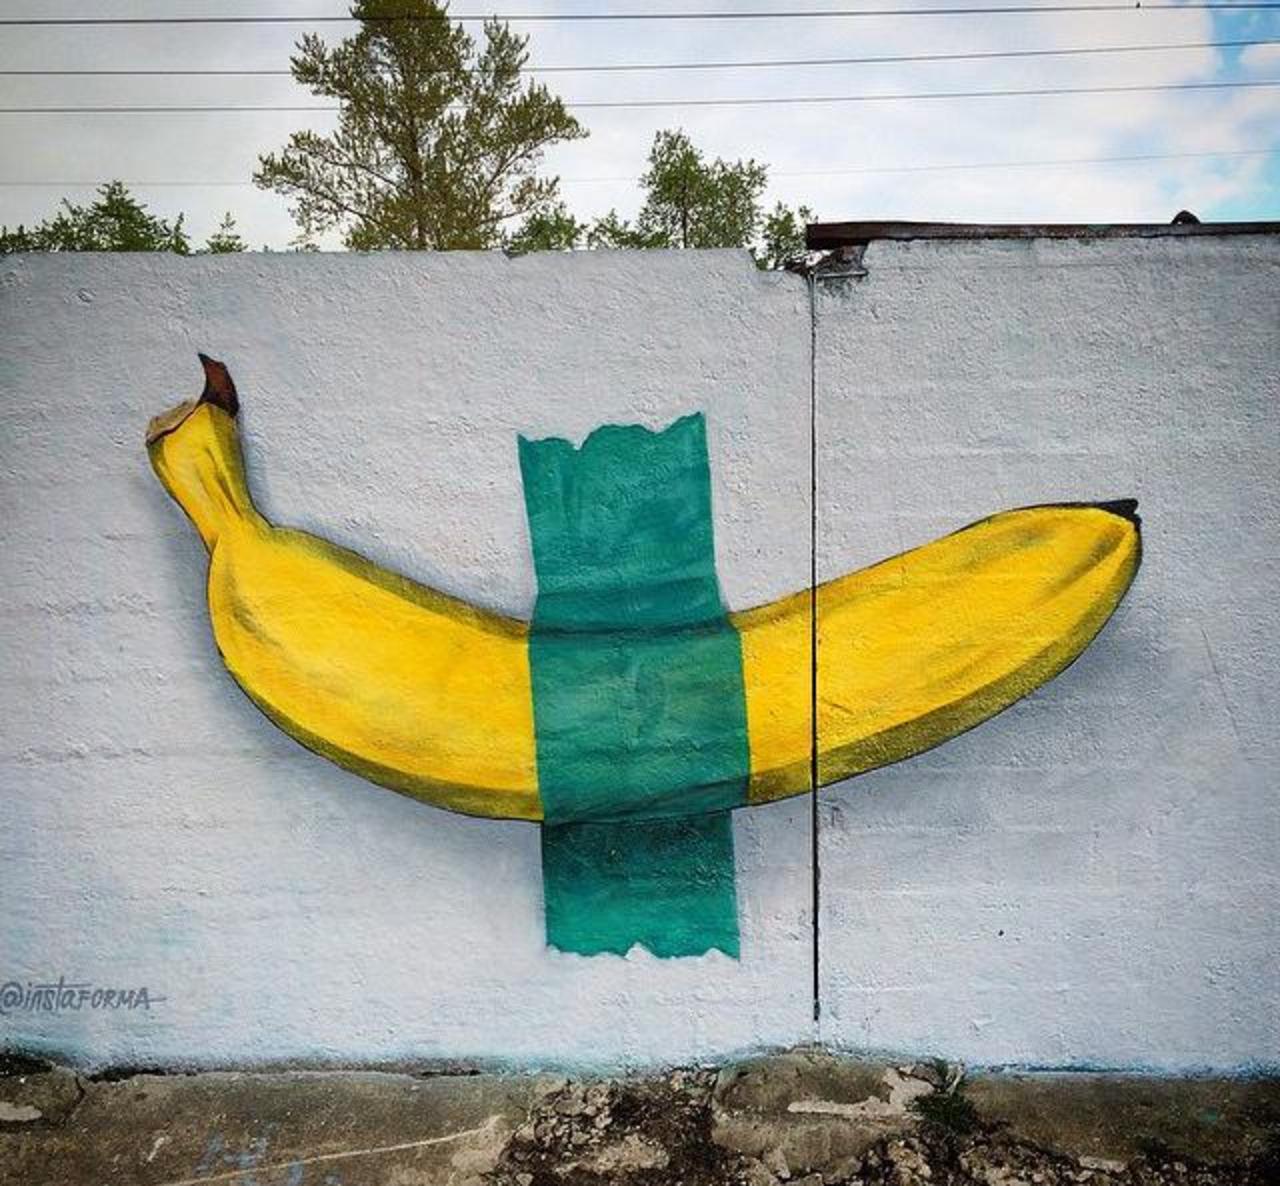 New Street Art by Ches 

#art #arte #graffiti #streetart http://t.co/pFCBFFePrk